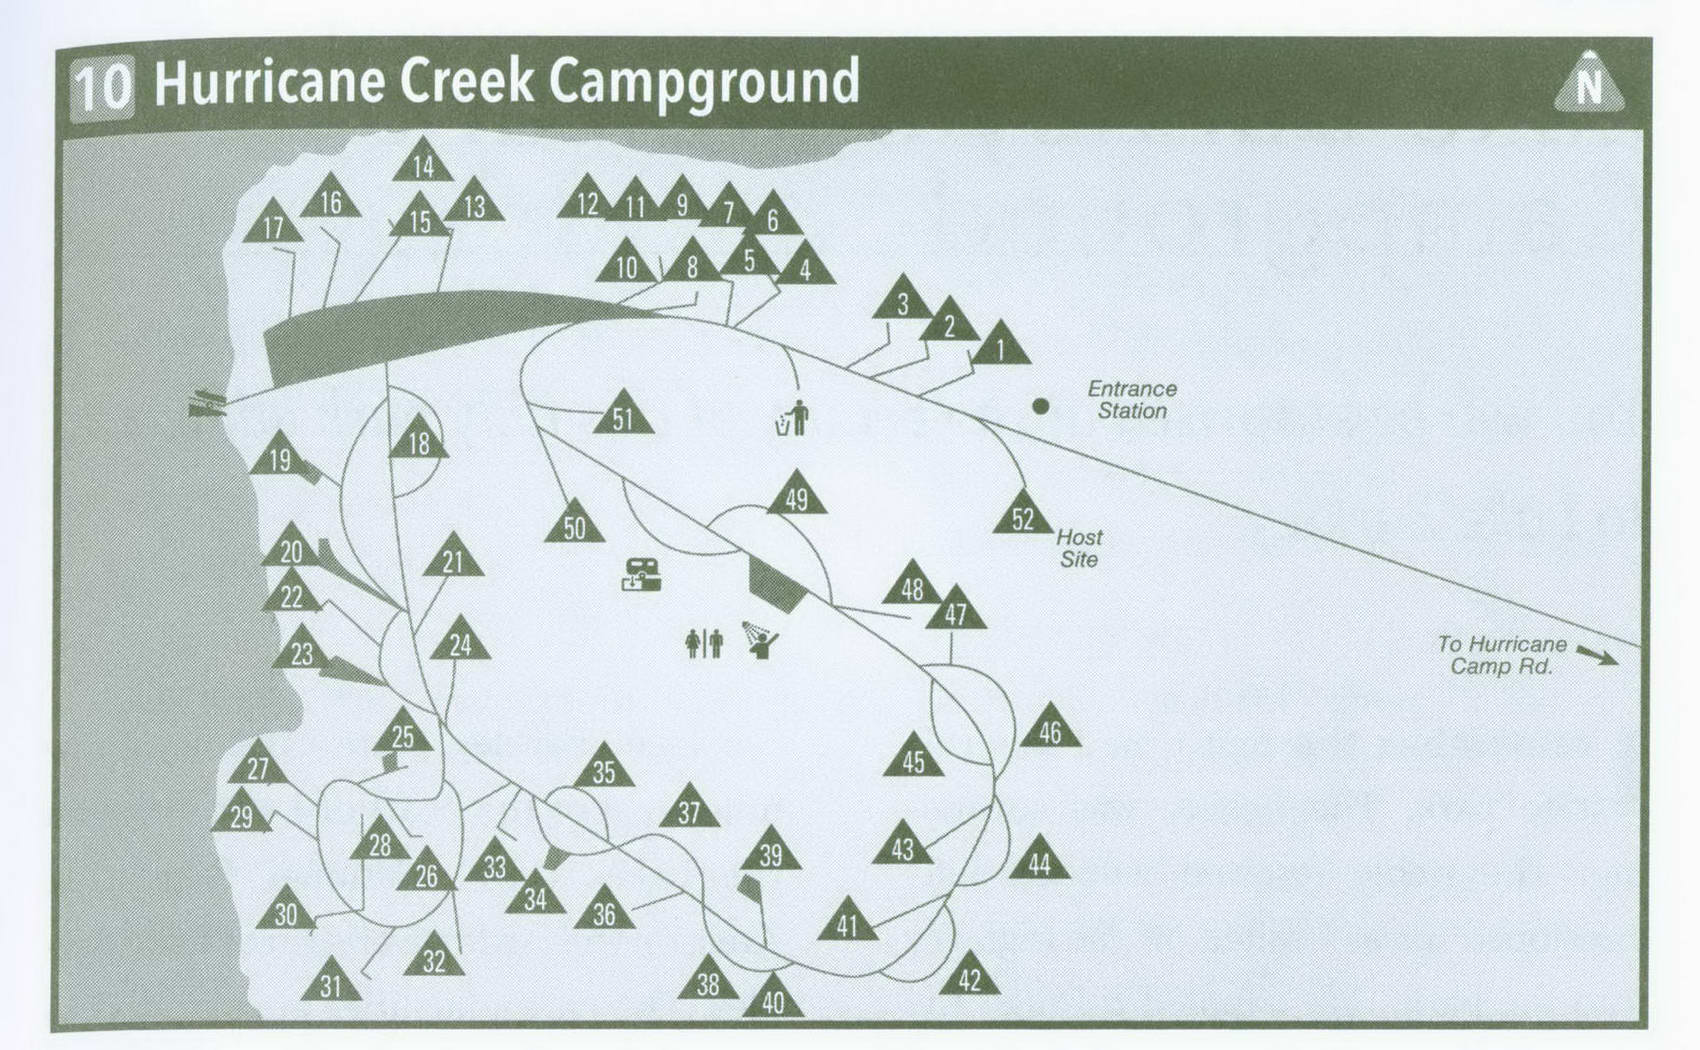 Plan of Hurricane Creek Campground